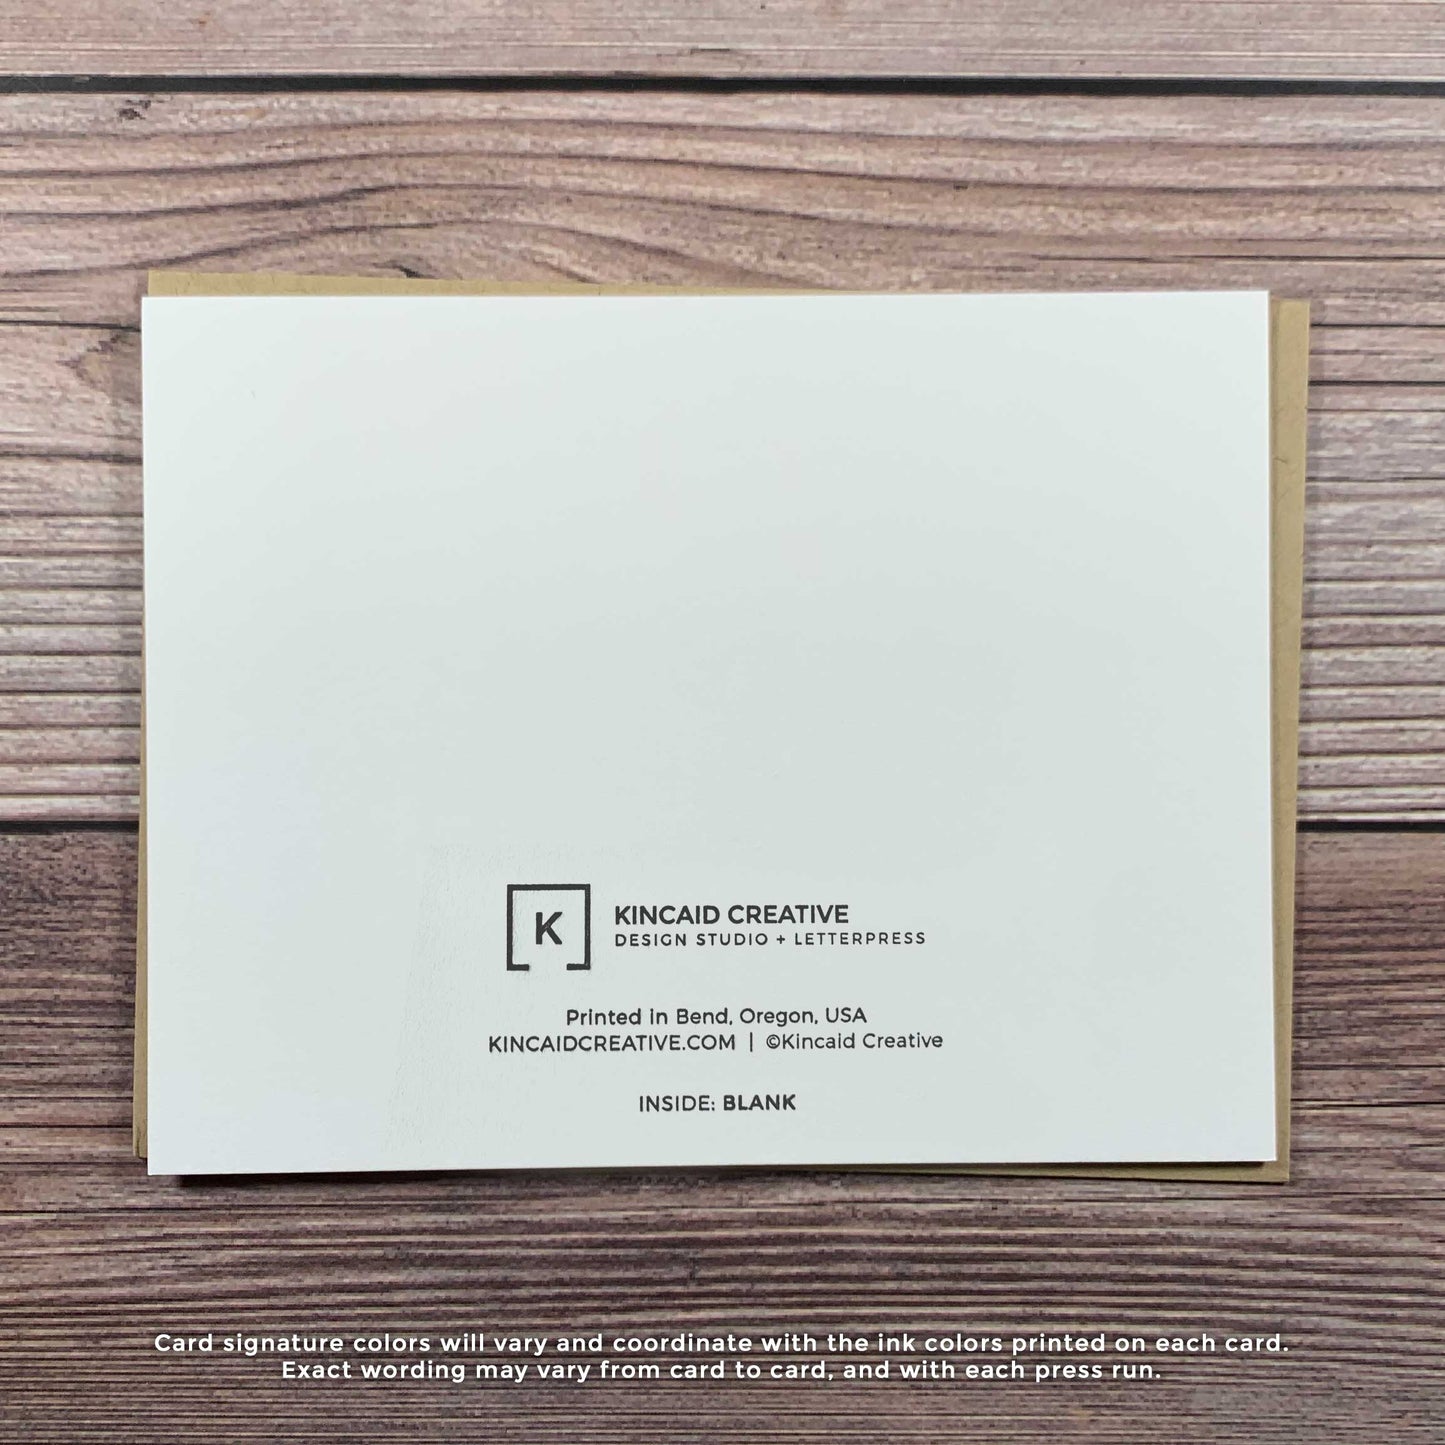 Letterpress love greeting card, blank inside, back view of card, Kincaid Creative Design and Letterpress Studio, Bend, Oregon